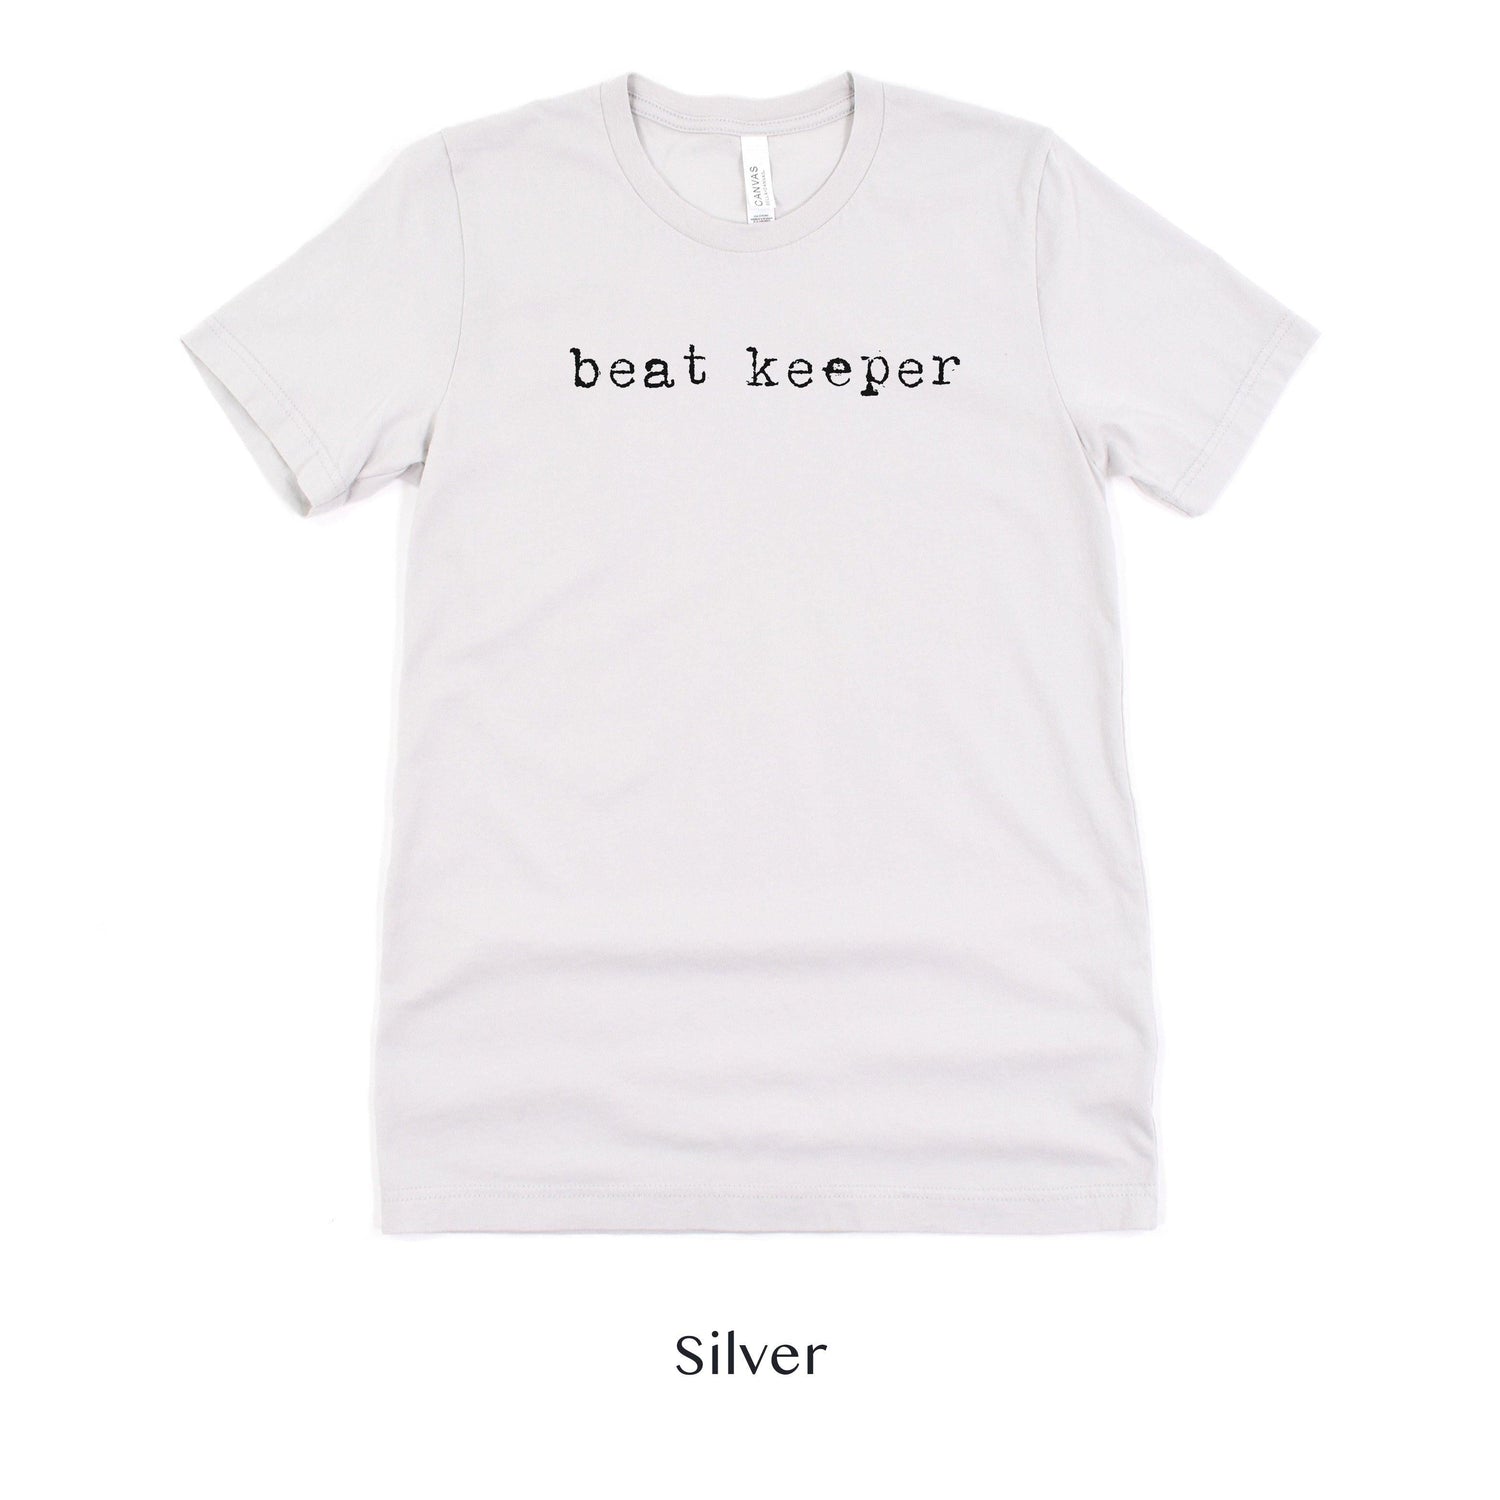 Beat Keeper - Wedding DJ Short-sleeve Tee by Oaklynn Lane - silver shirt